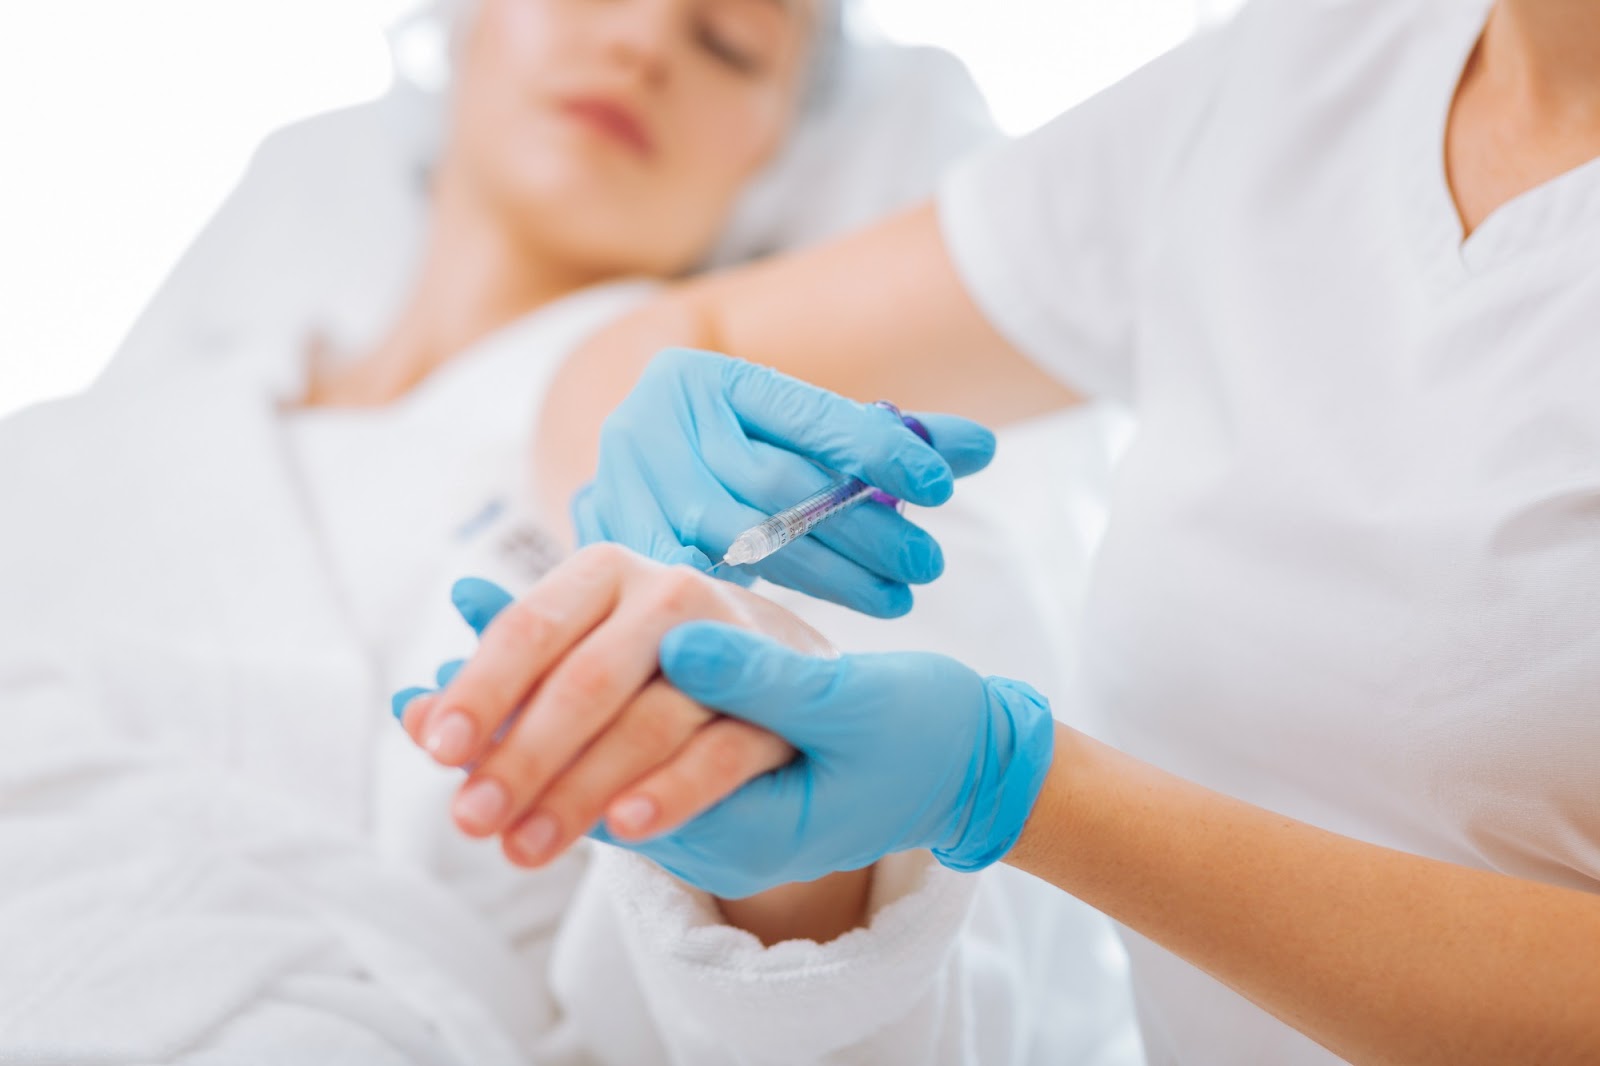 Patient receiving Radiesse injection for hand rejuvenation.